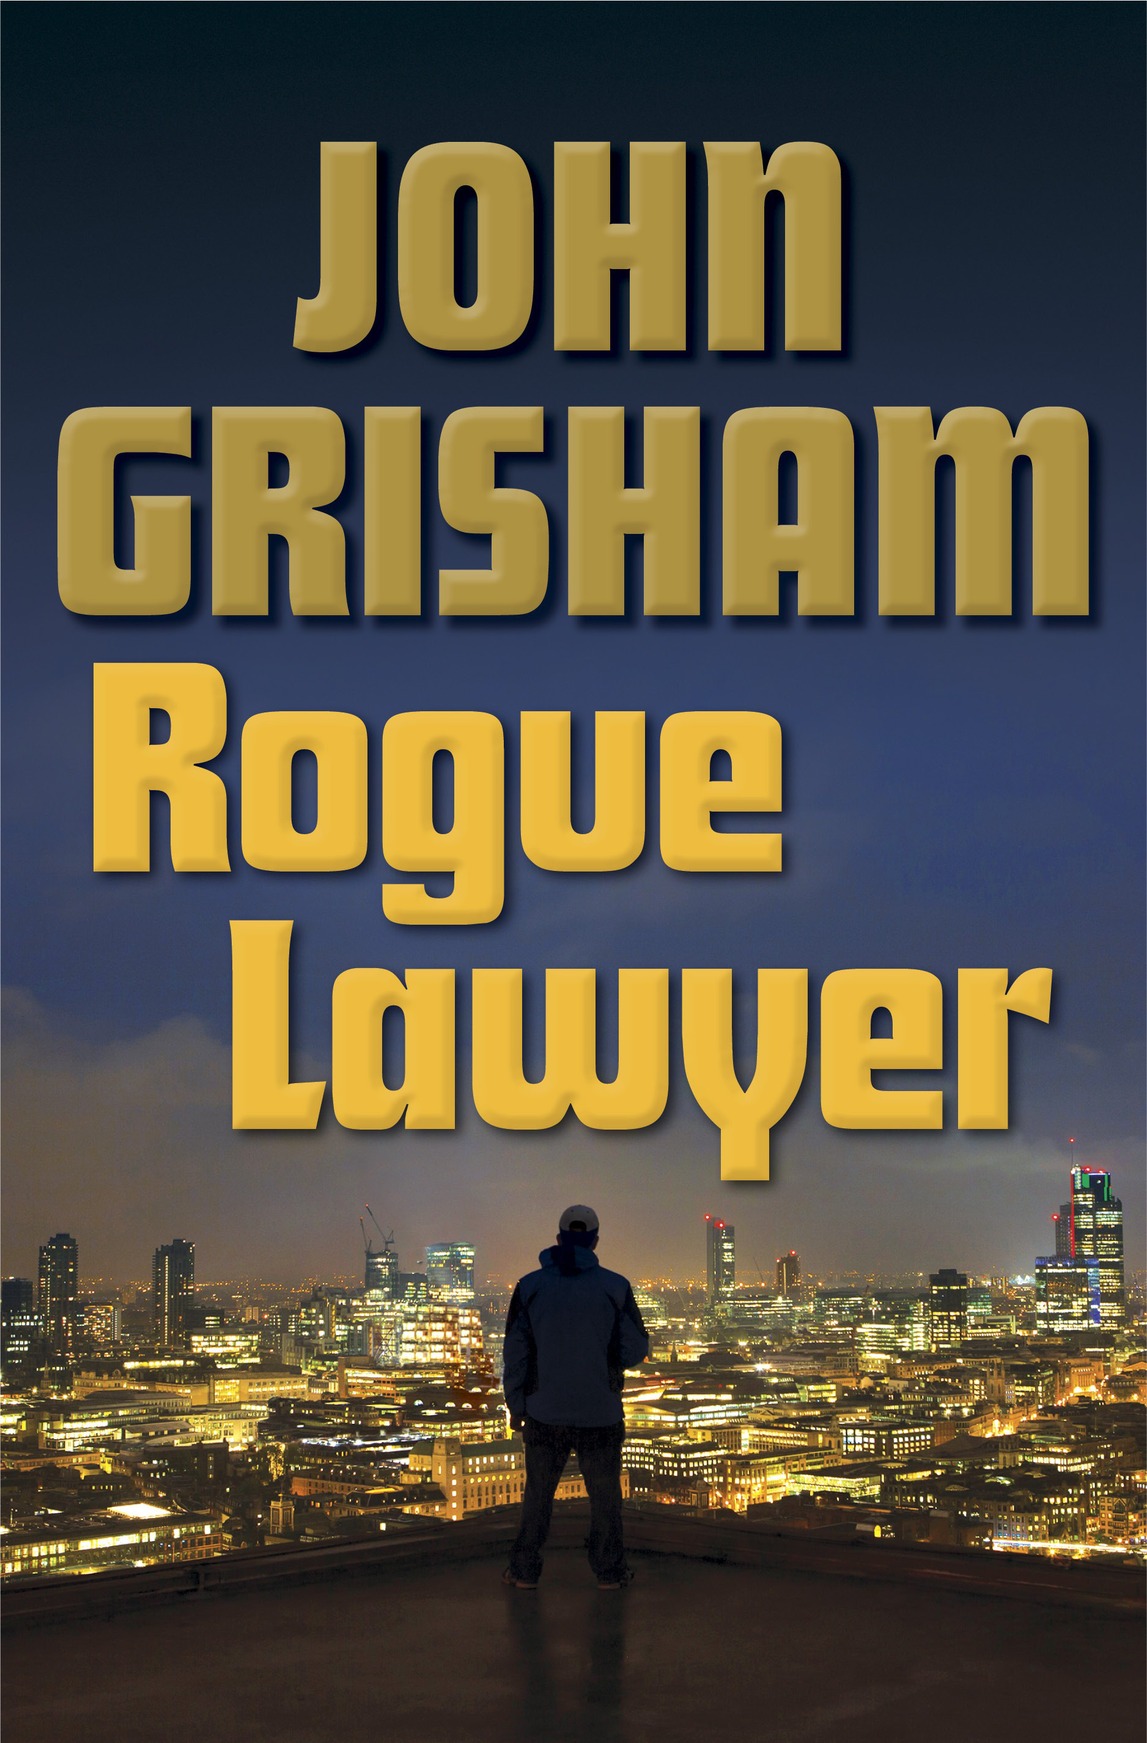 Rogue Lawyer (2015) by John Grisham